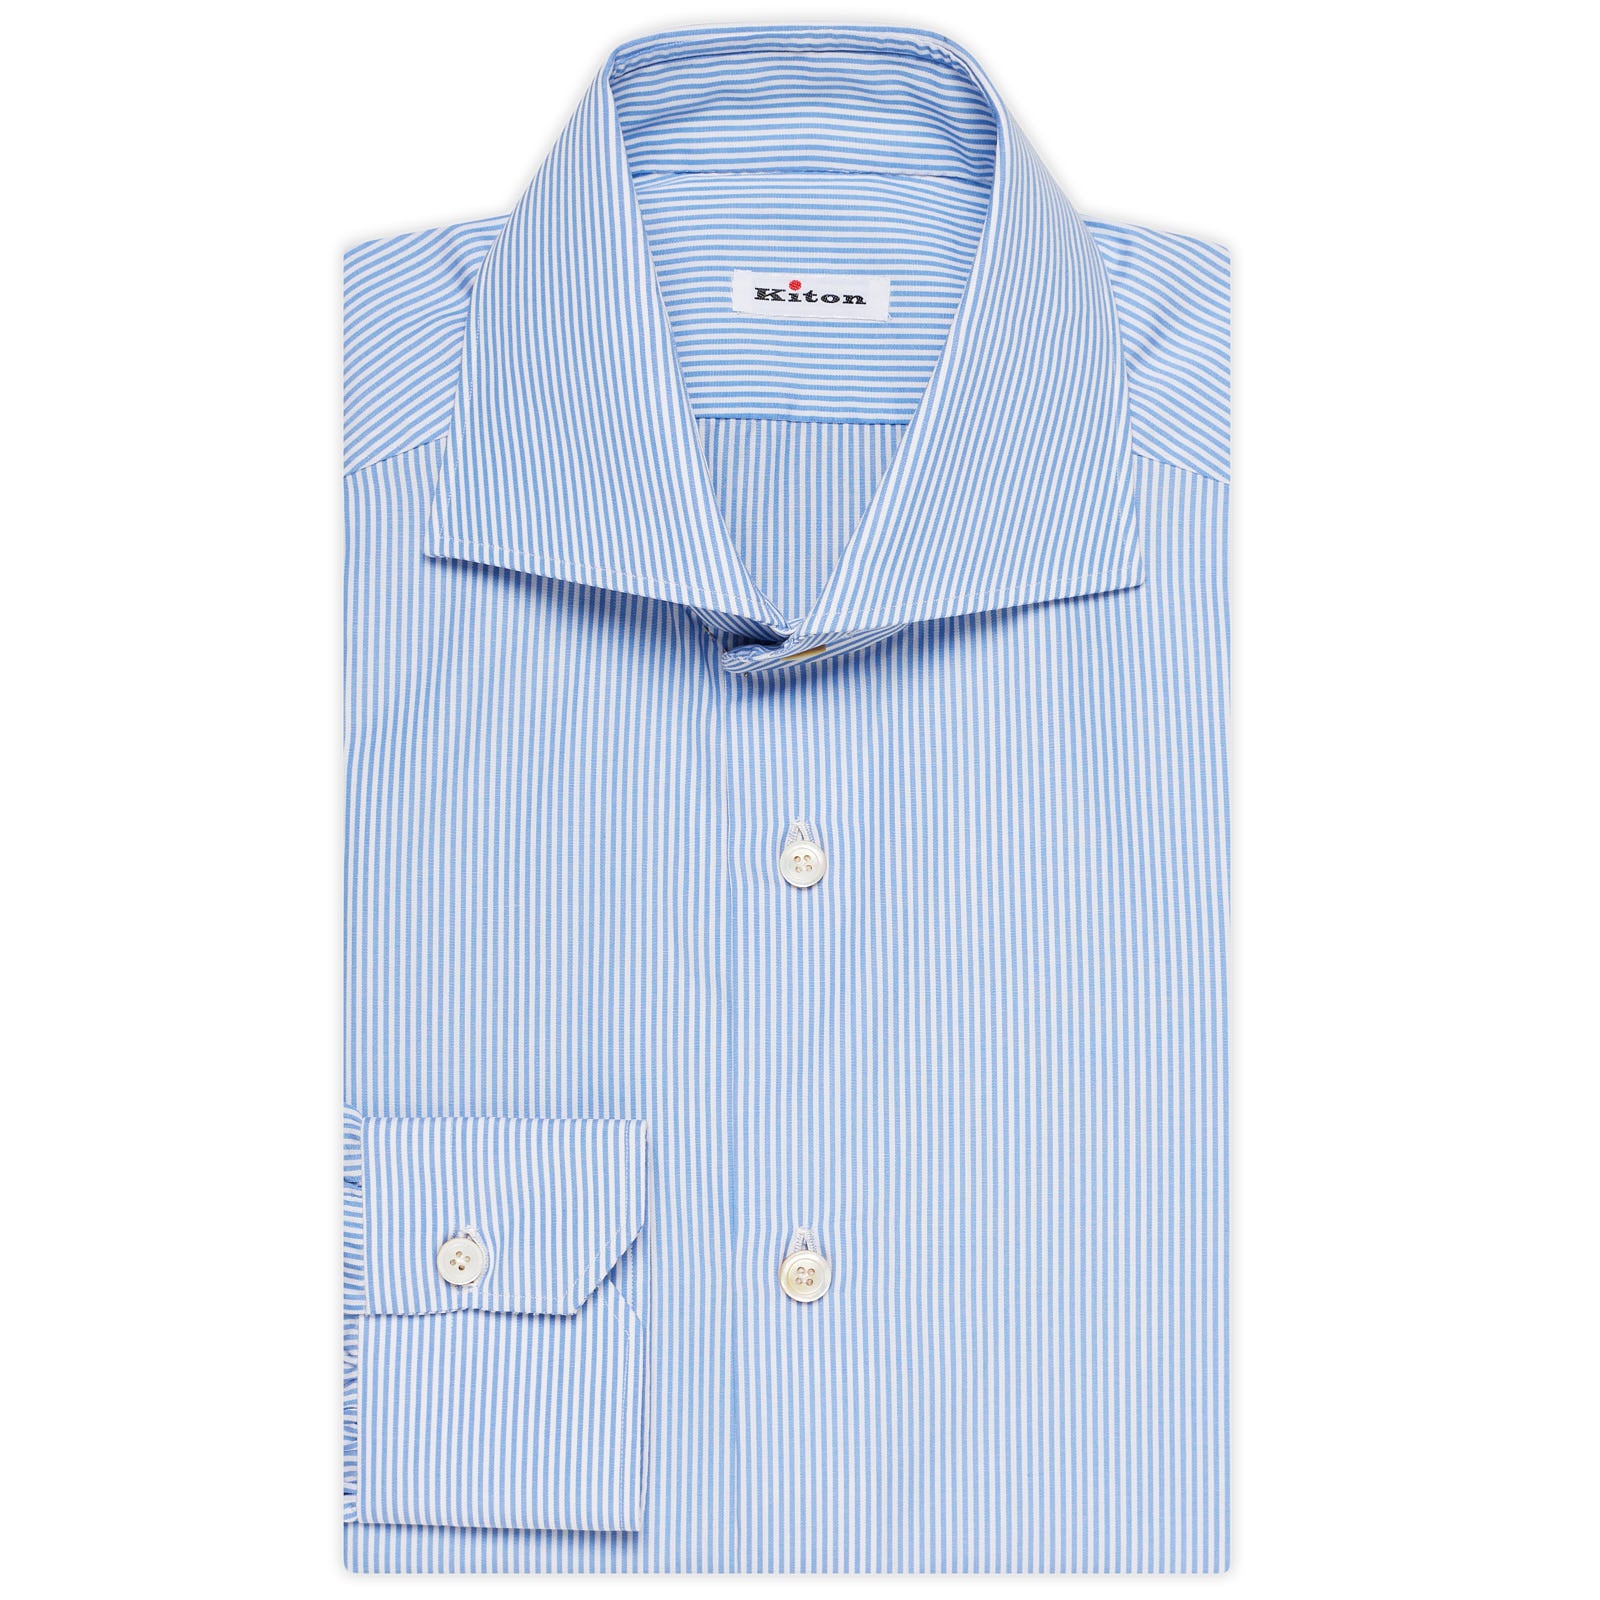 KITON Napoli Handmade Blue Striped Poplin Cotton Dress Shirt EU 40 US 15.75 NEW